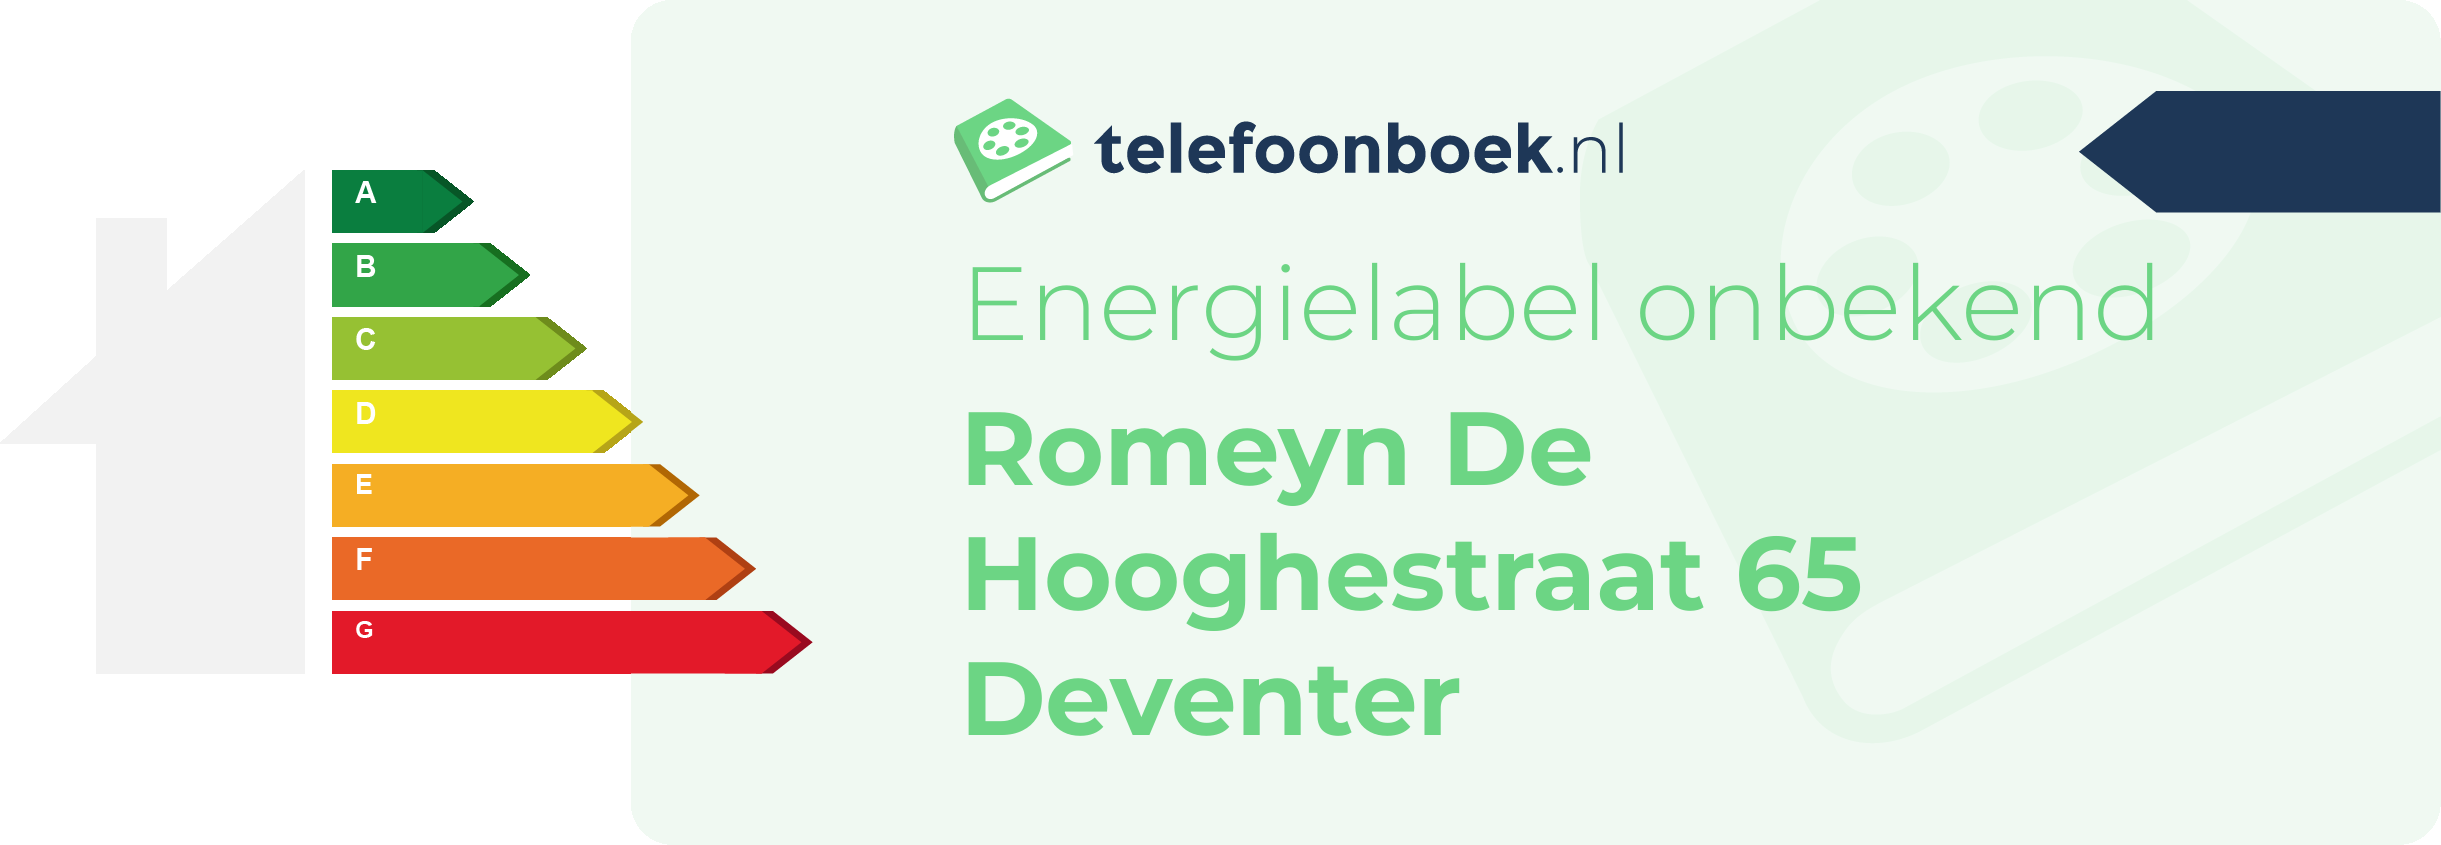 Energielabel Romeyn De Hooghestraat 65 Deventer